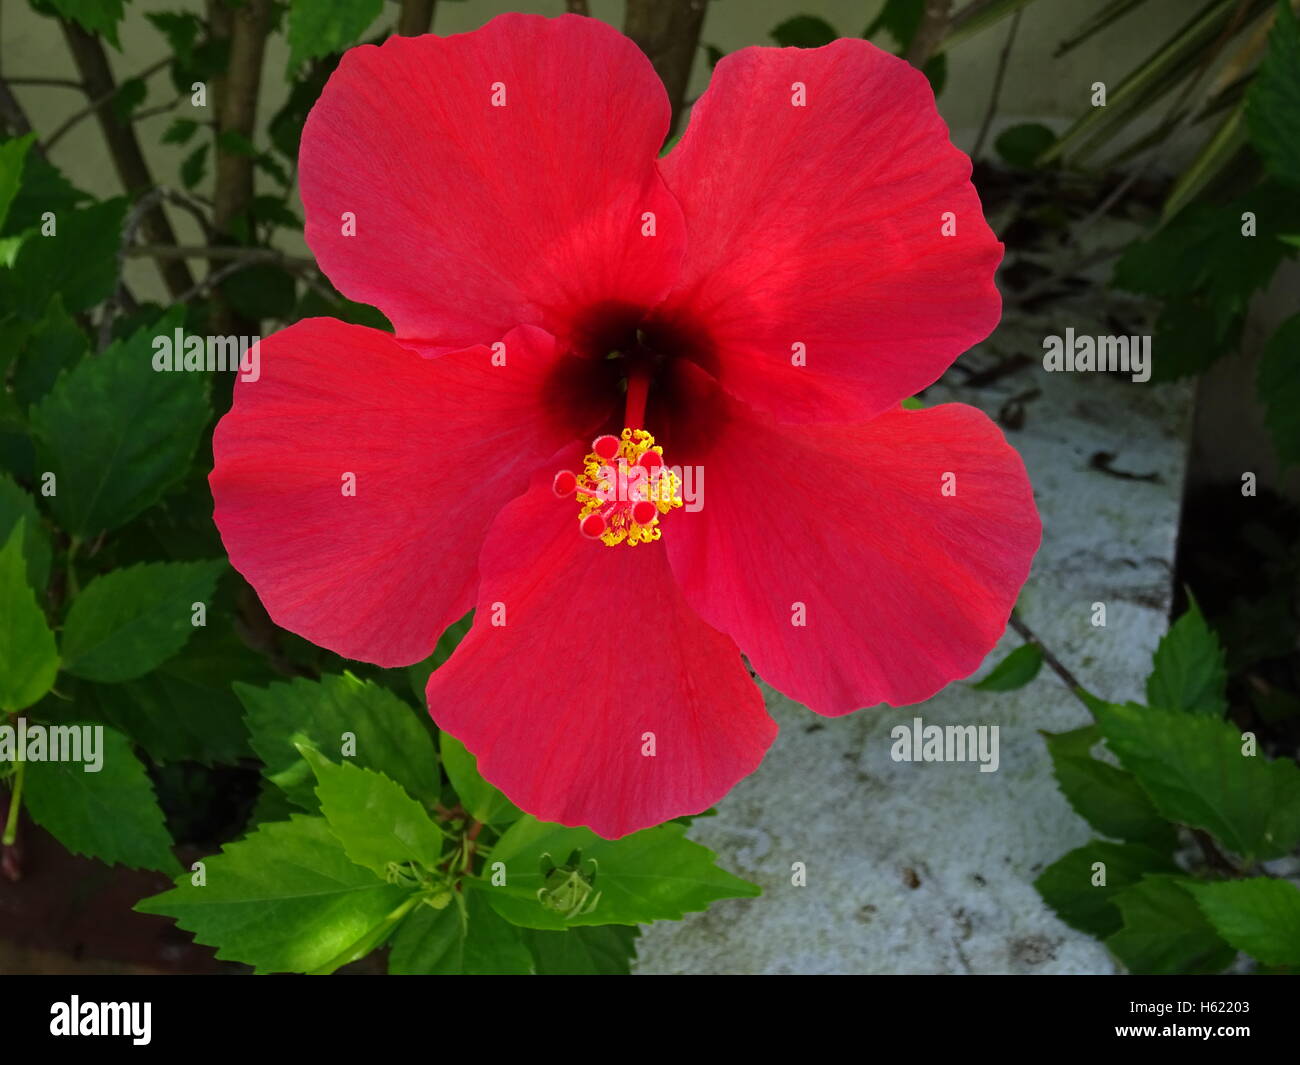 Hibiscus flower bloom Stock Photo